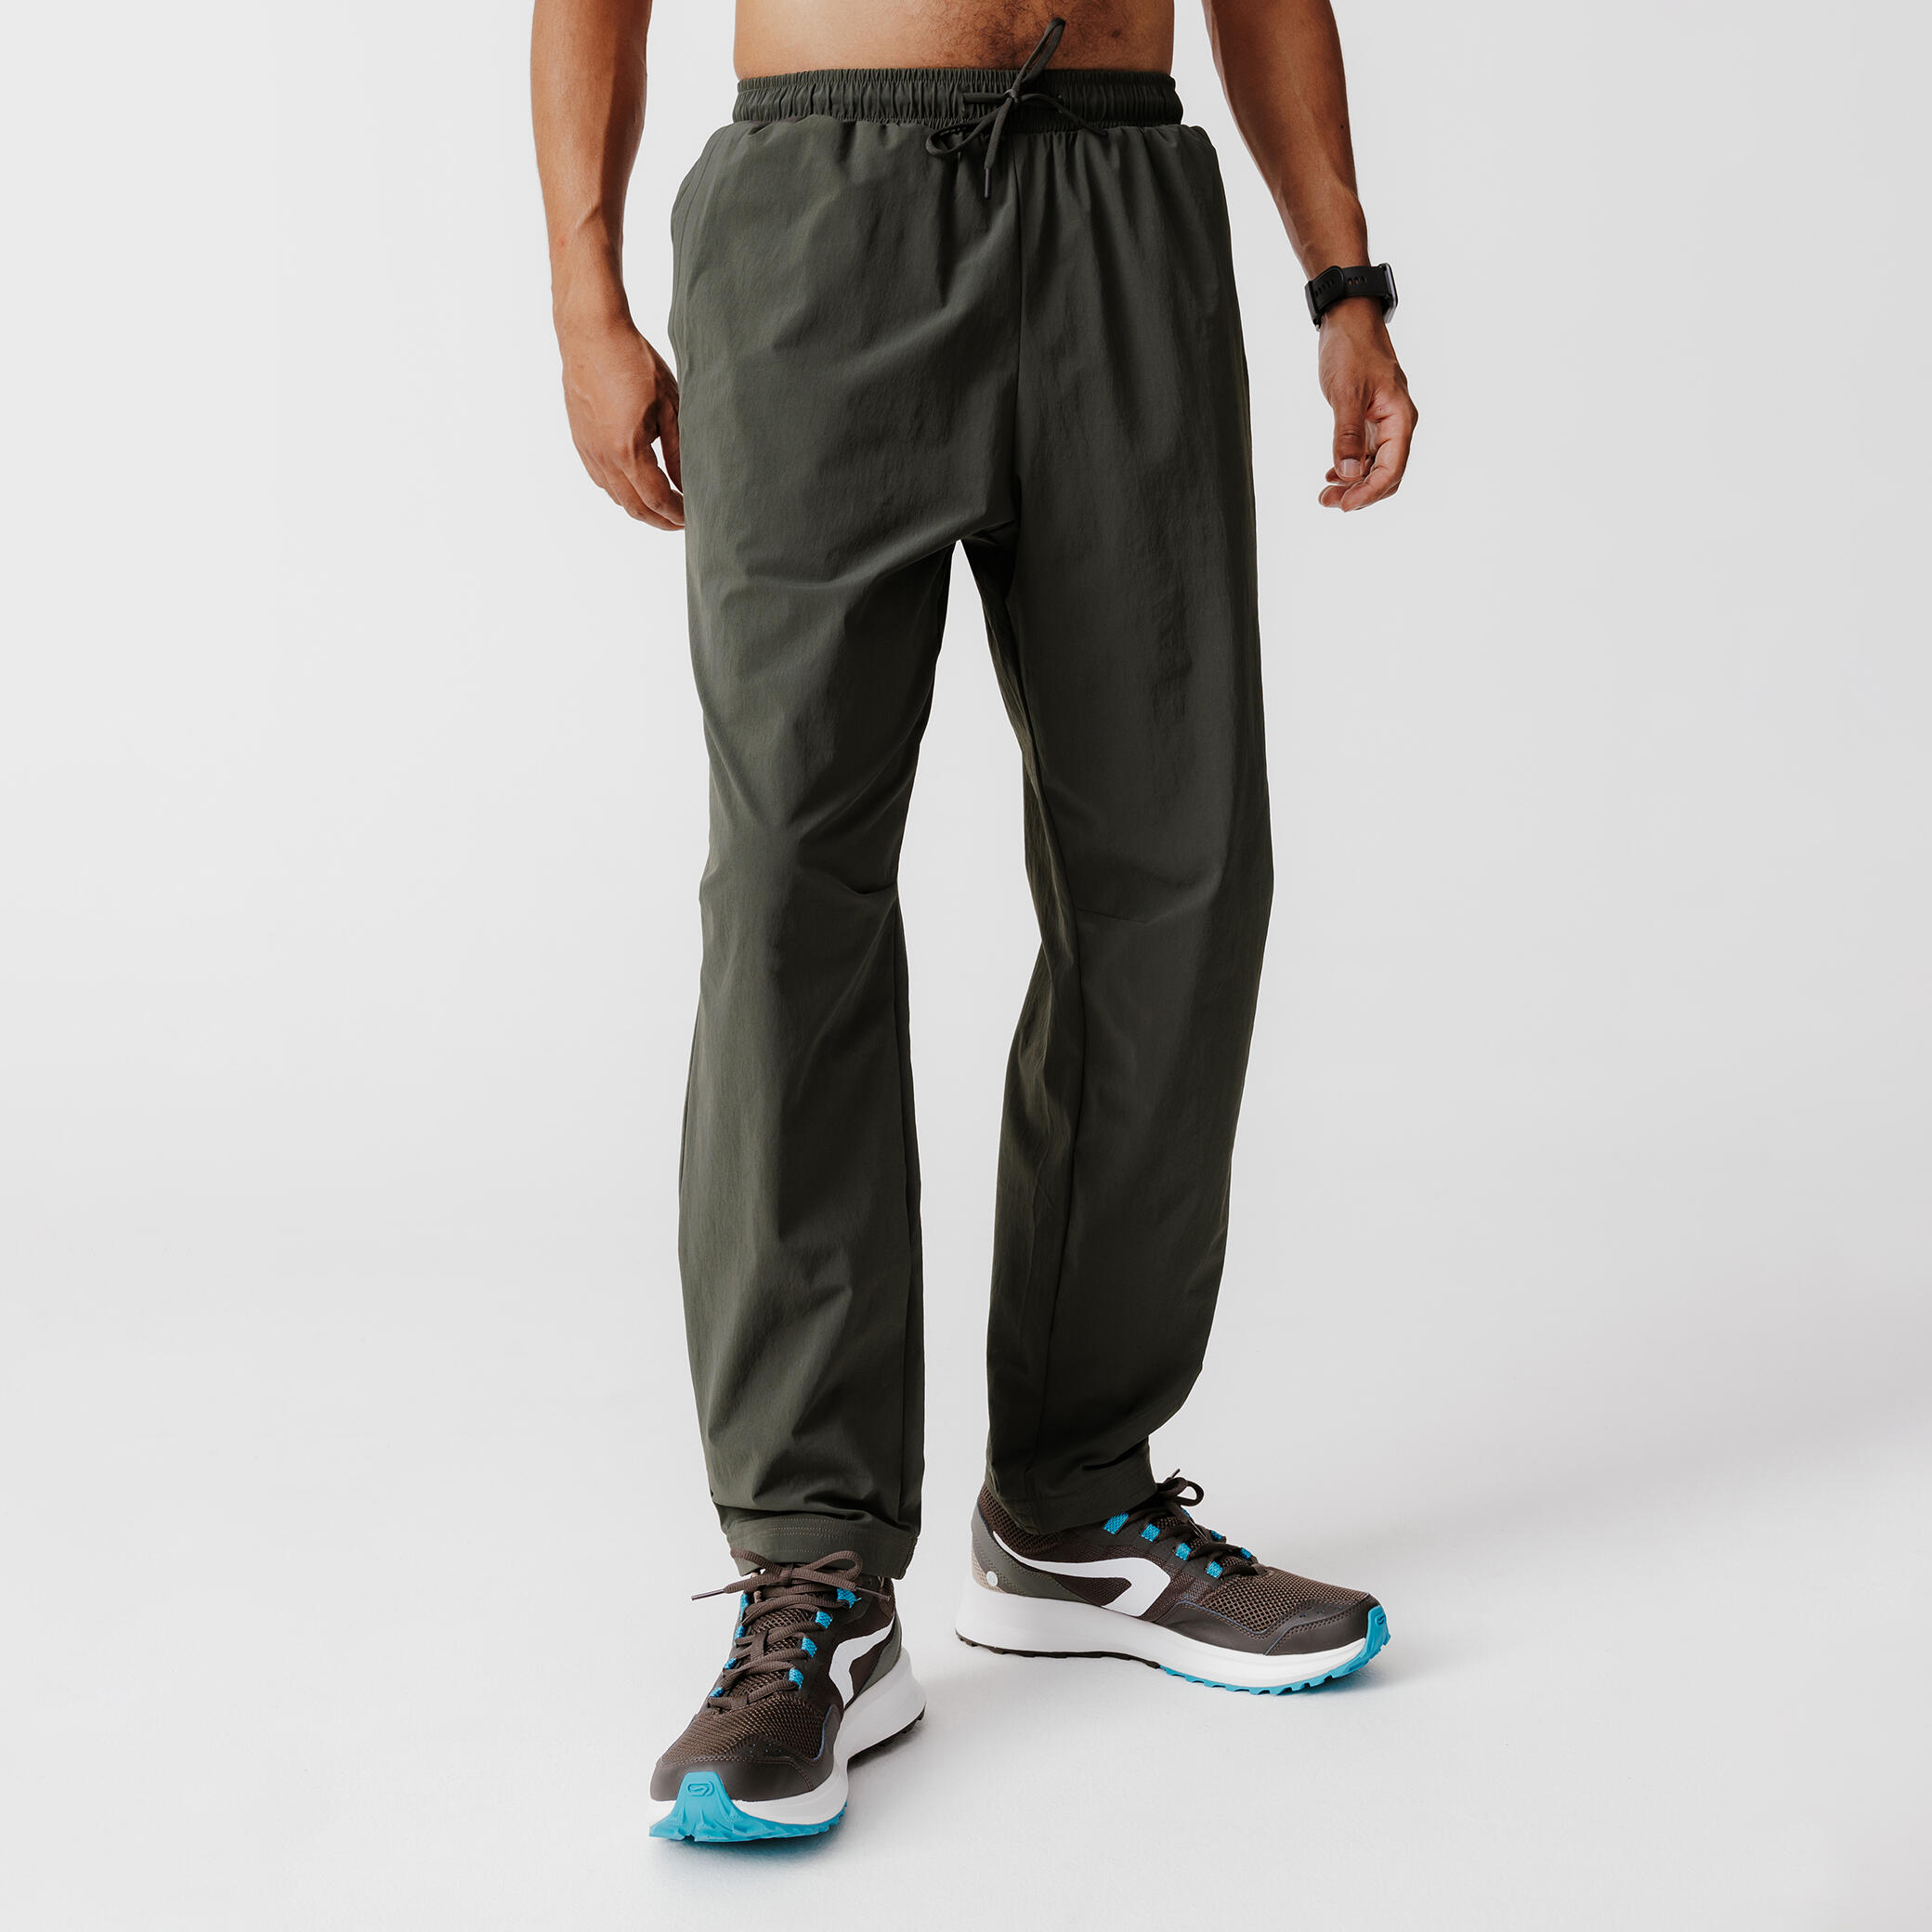 men s dry 500 breathable running trousers green kalenji 8772986